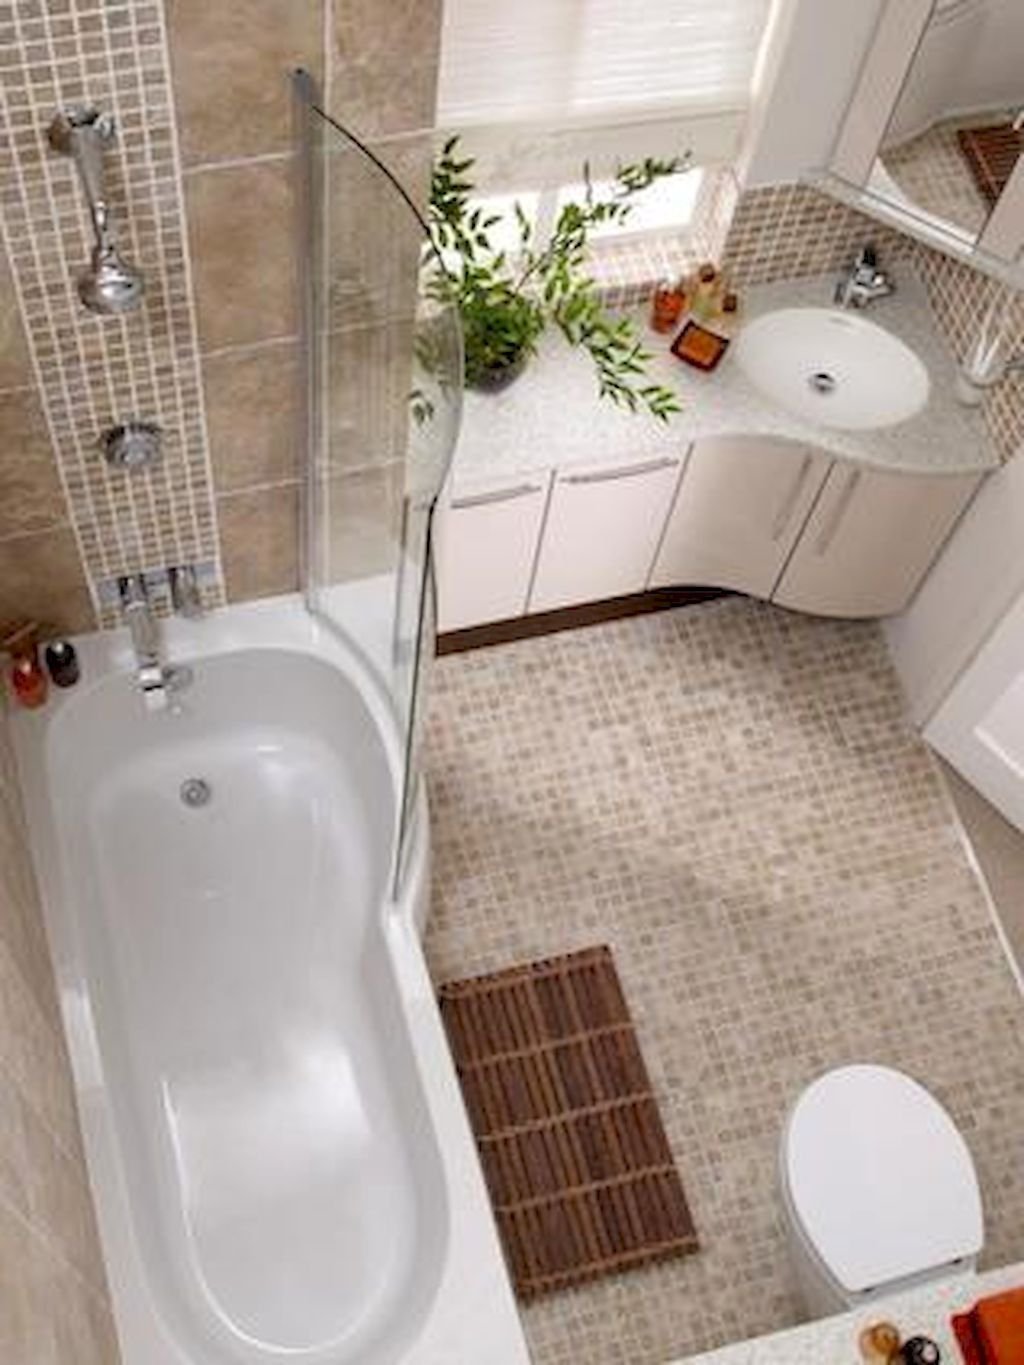 Ванная комната дизайн мал размер. Ванач Комта не большая. Малогабаритные Ванные комнаты. Обустройство небольшой ванной комнаты. Небольшая ванная комната.